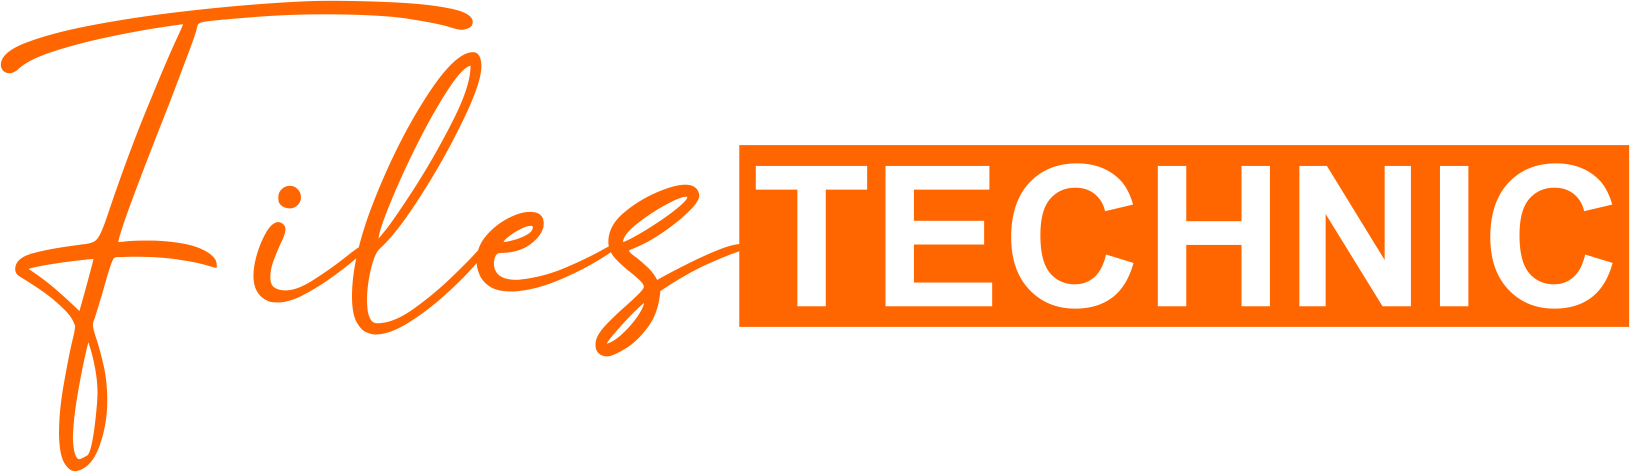 Filestechnic Logo